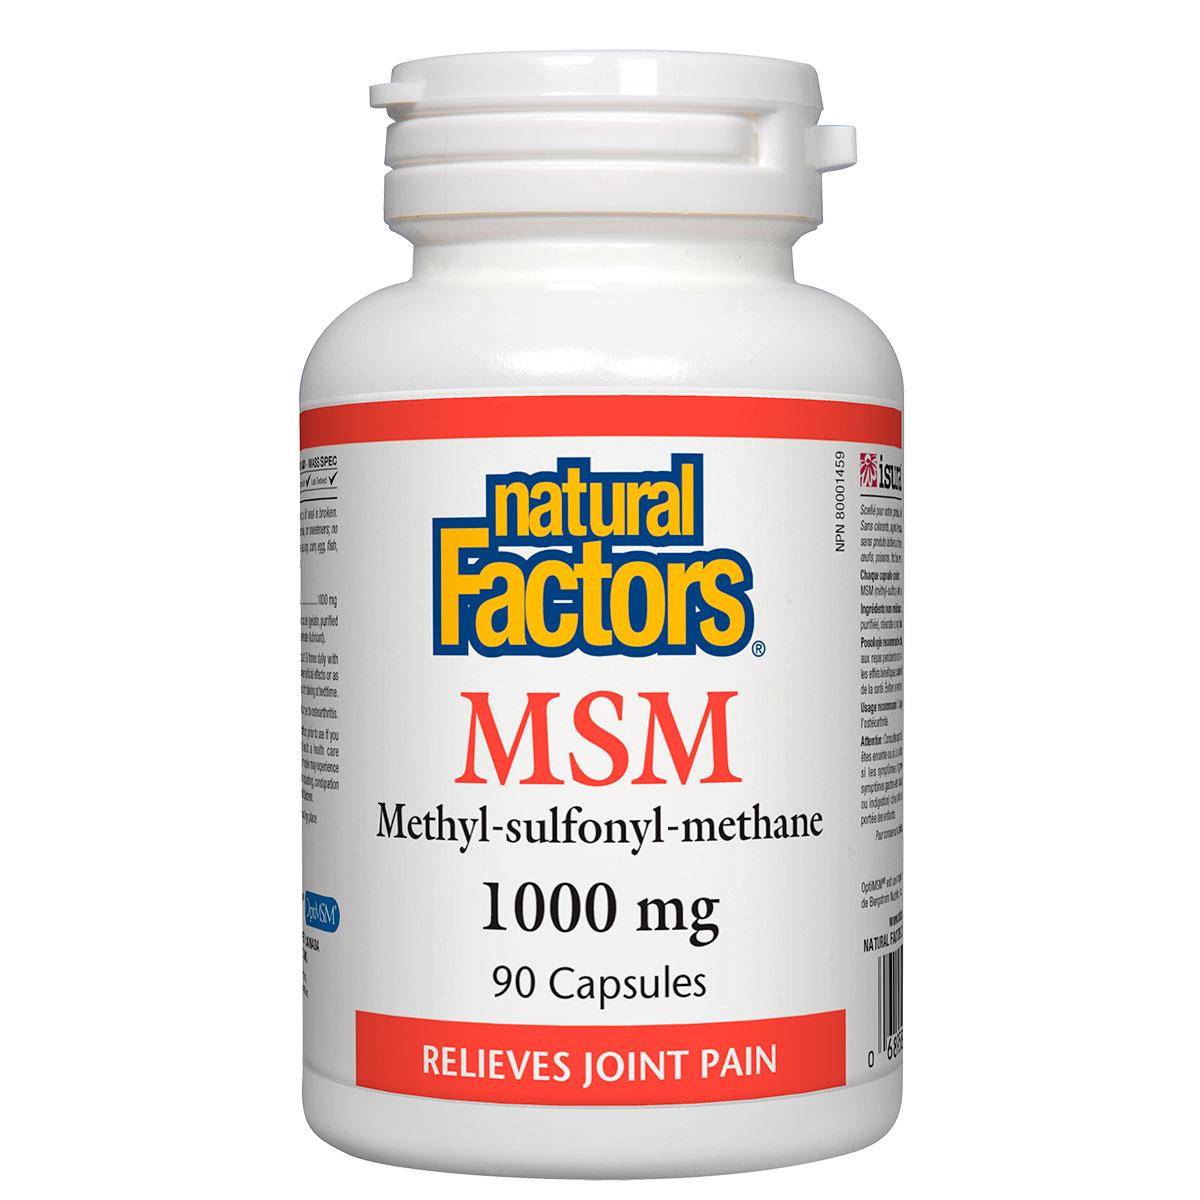 Natural Factors MSM, 1000mg, 90 Caps - Joint Pain Relief & Health Benefits